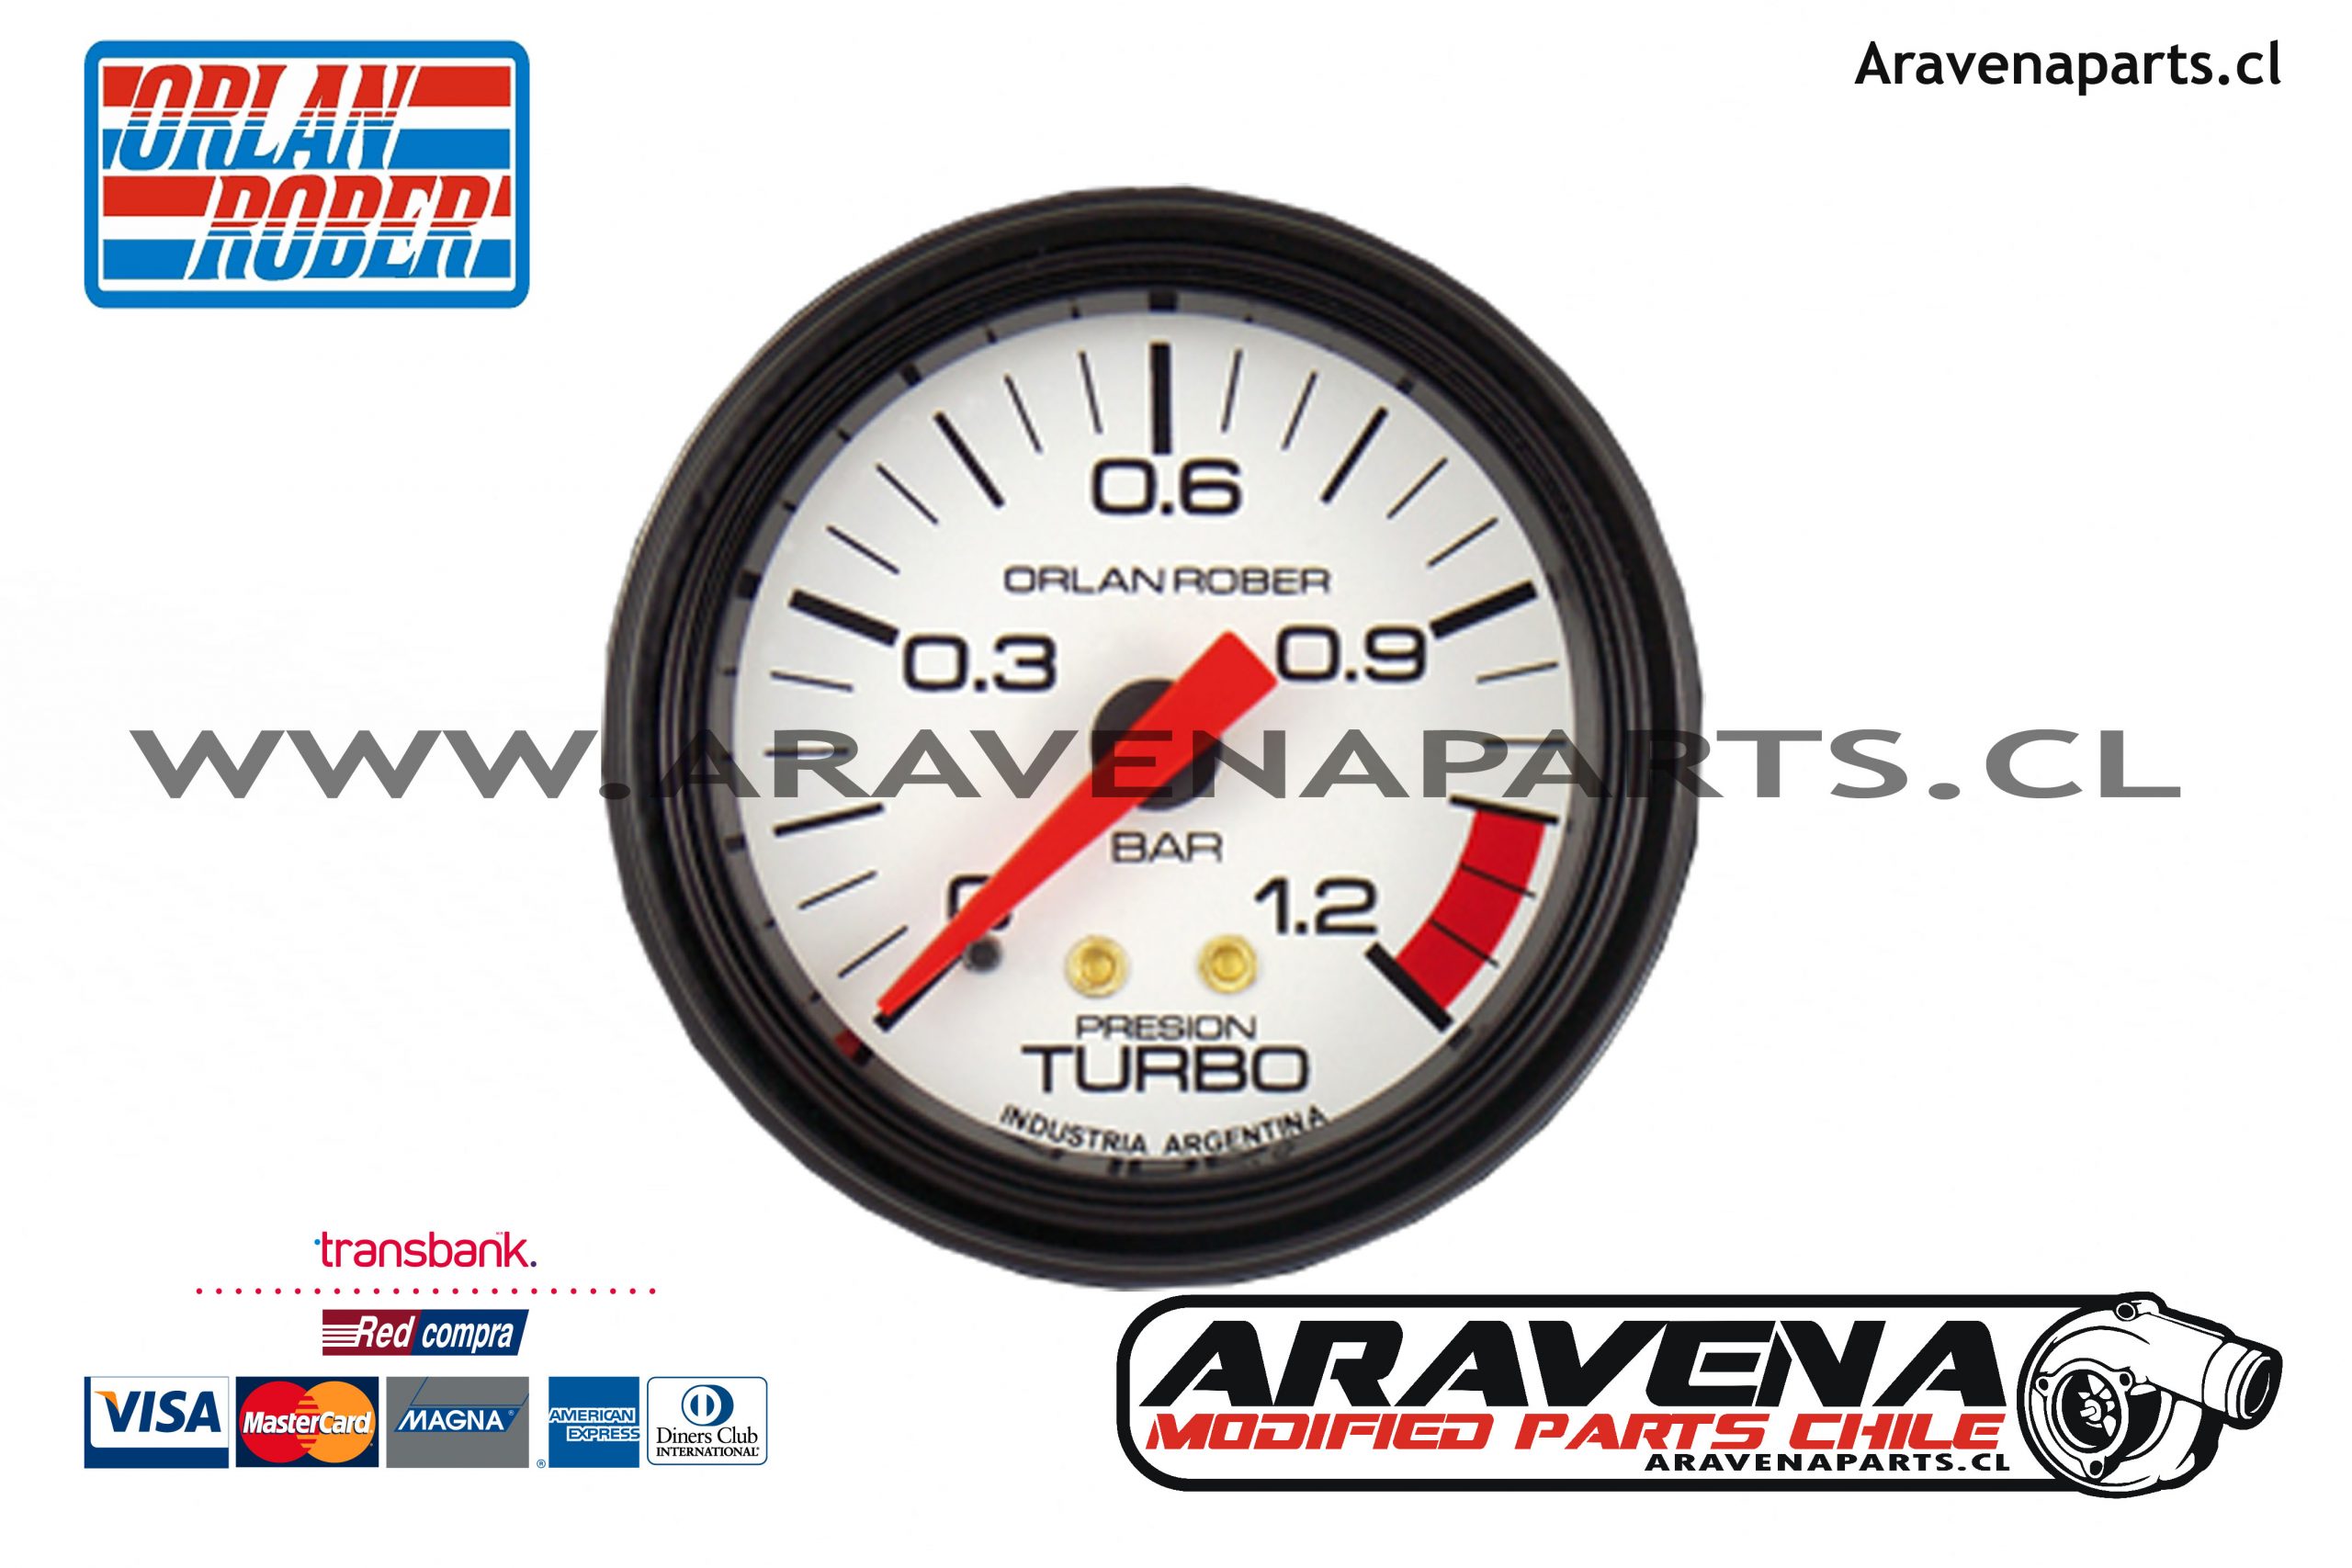 Reloj ORLAN ROBER Presion Turbo 1.2BAR 52mm Mecanico Linea Blanca 412 H 12  - Aravena Parts